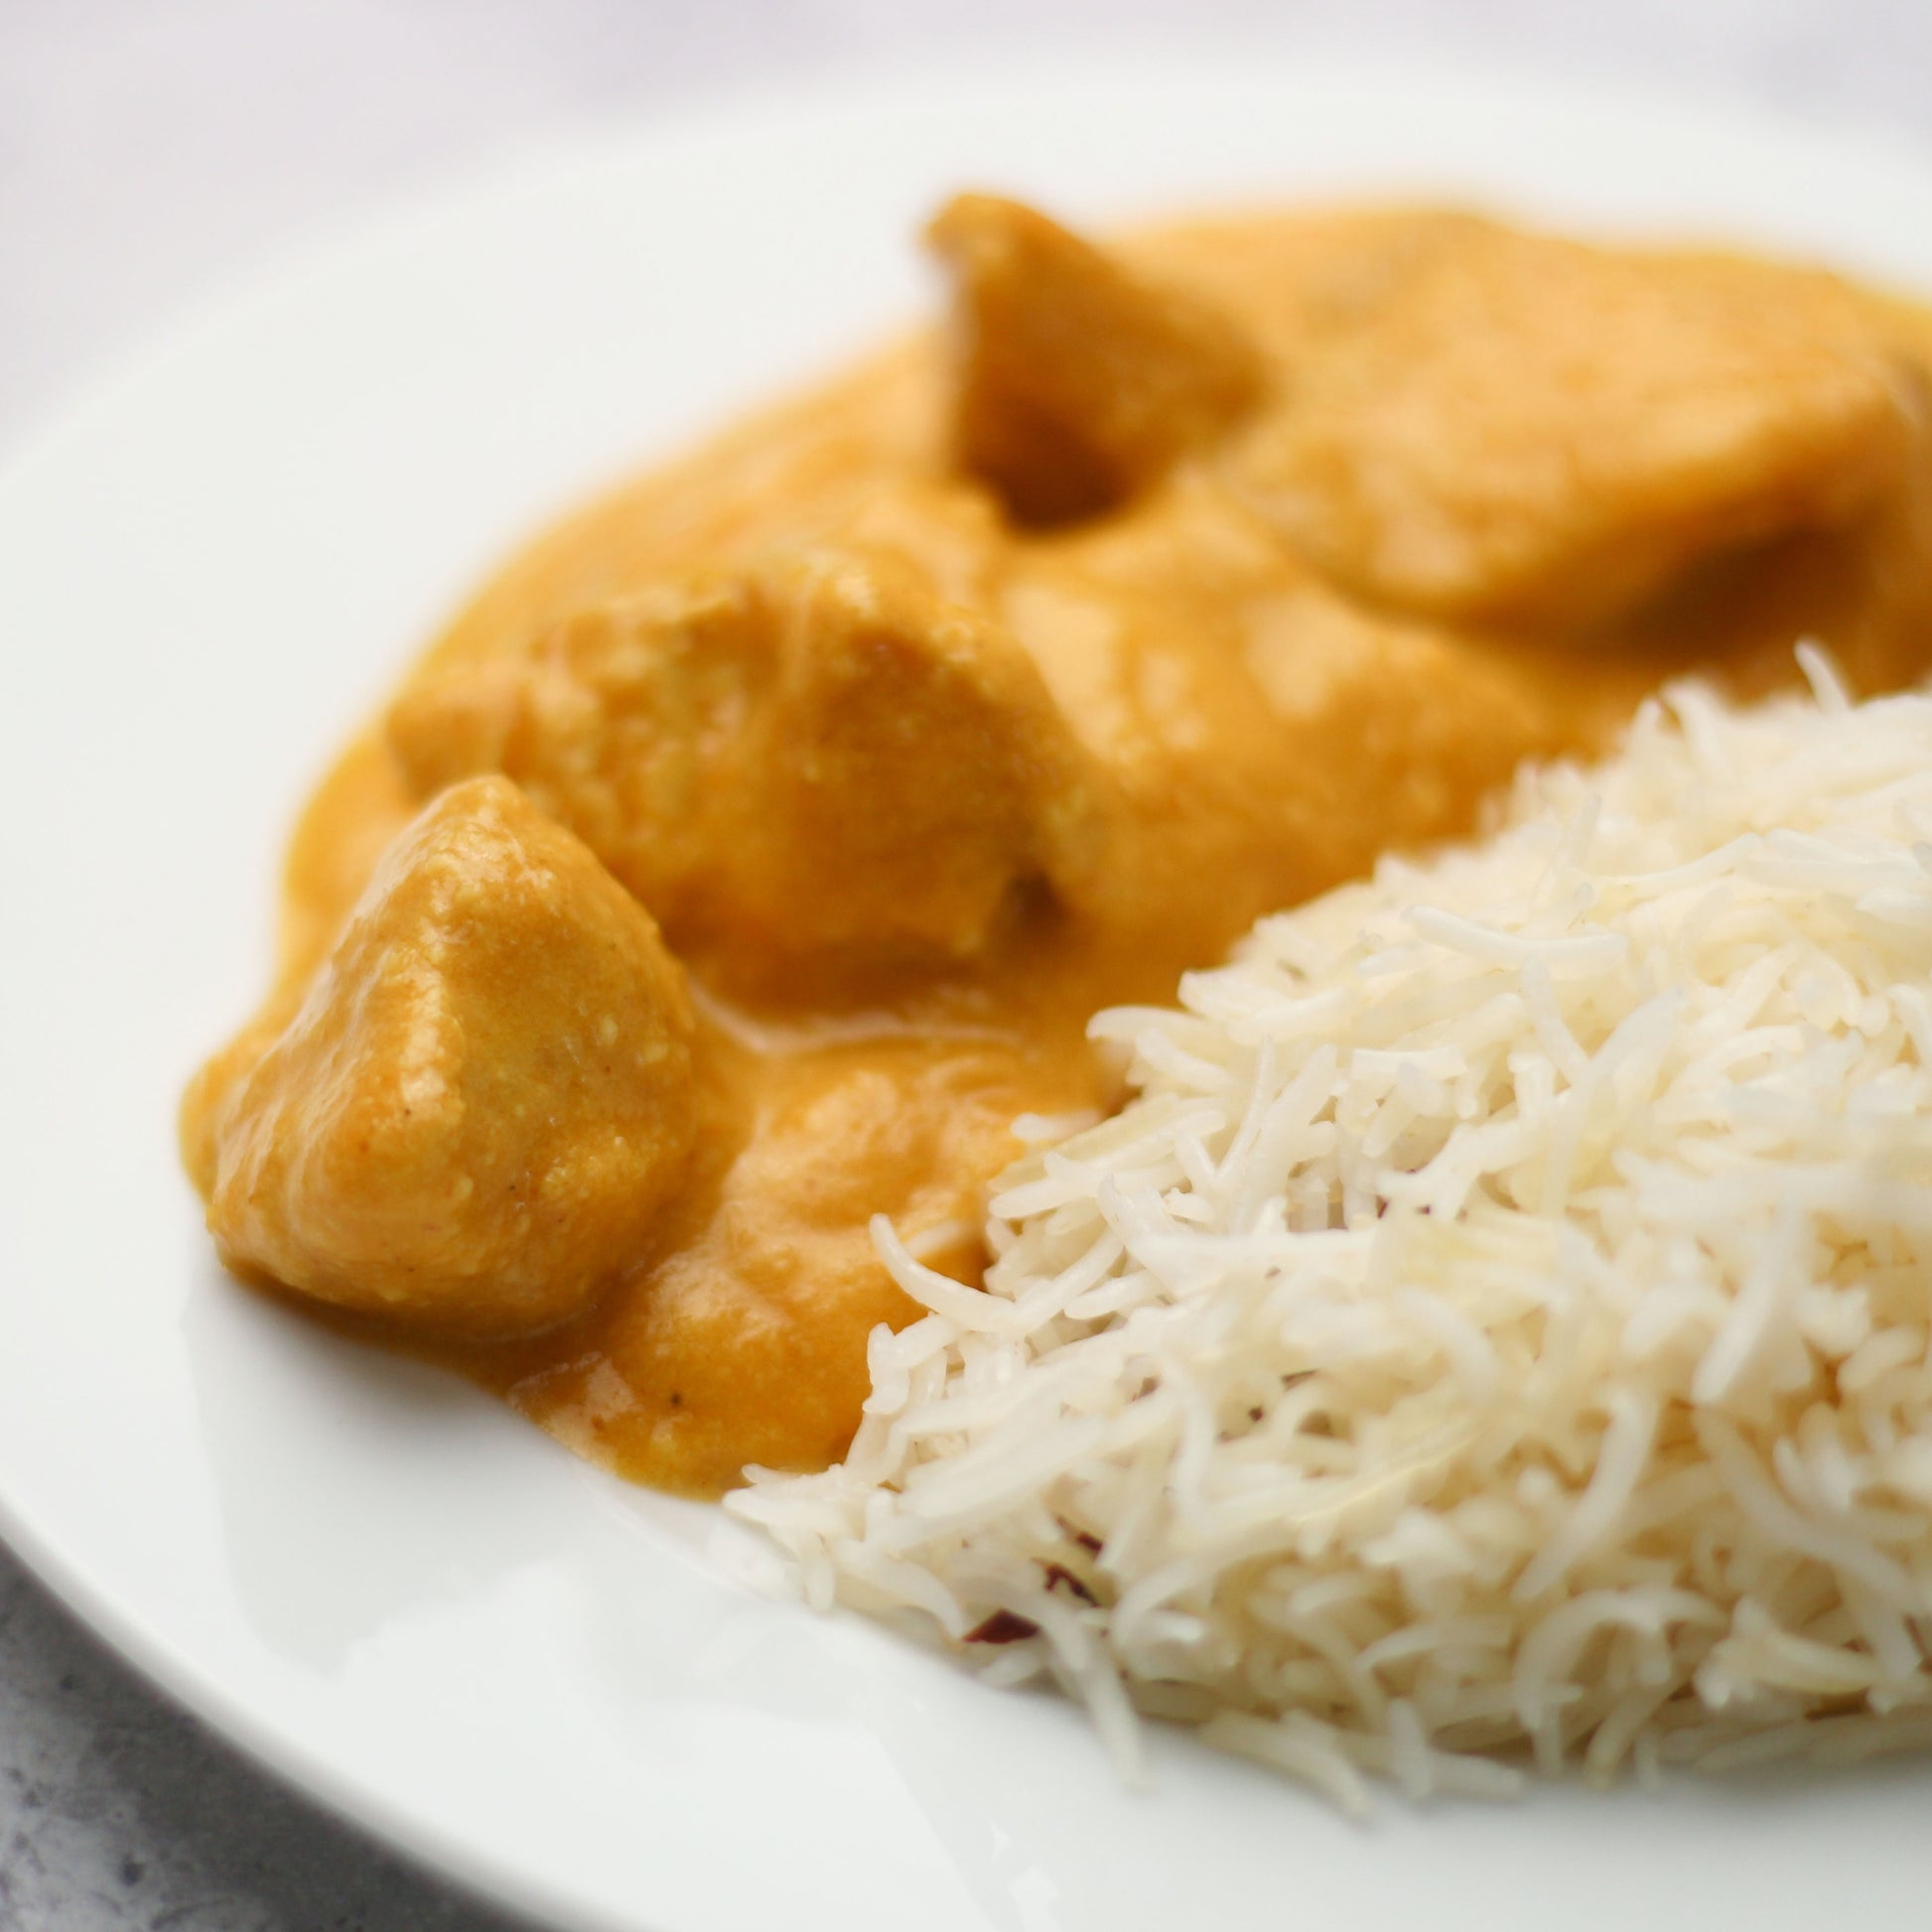 Korma curry with rice